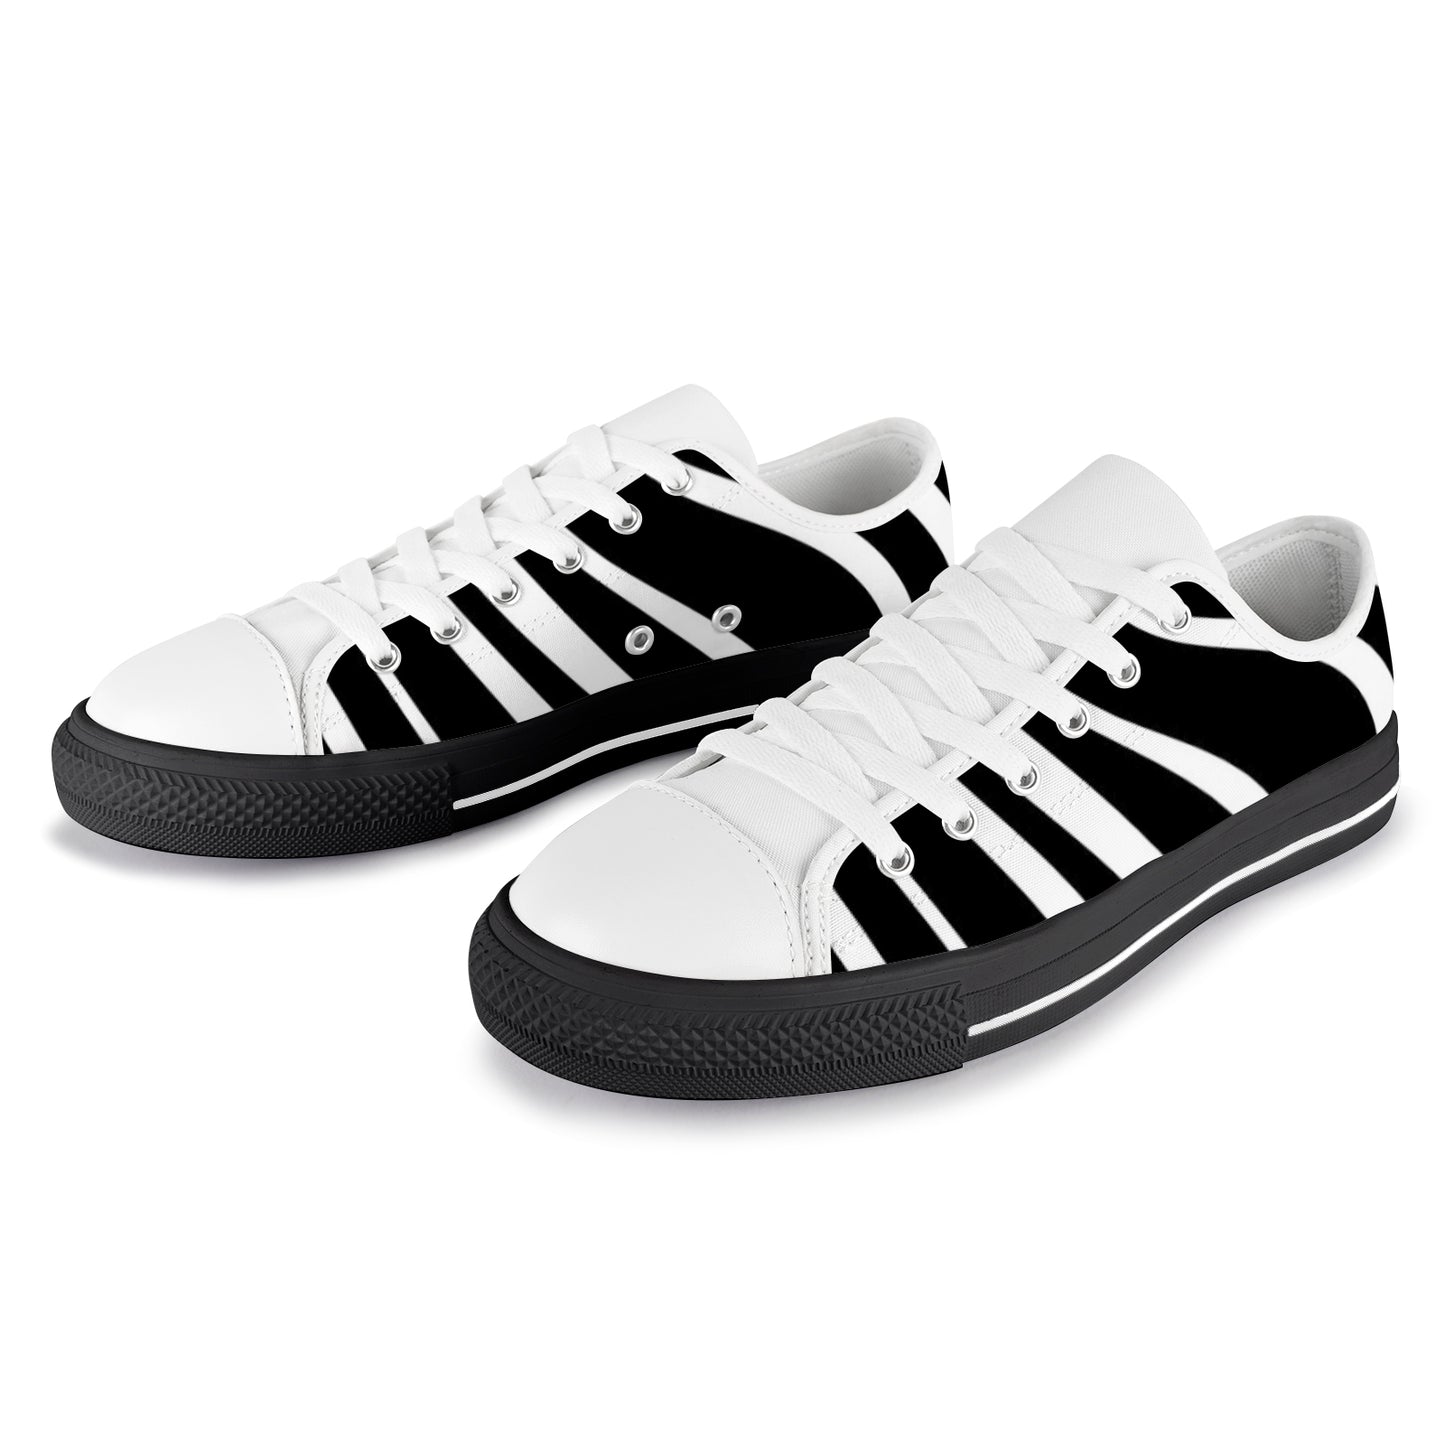 Women's Sneakers - Black/White Combo